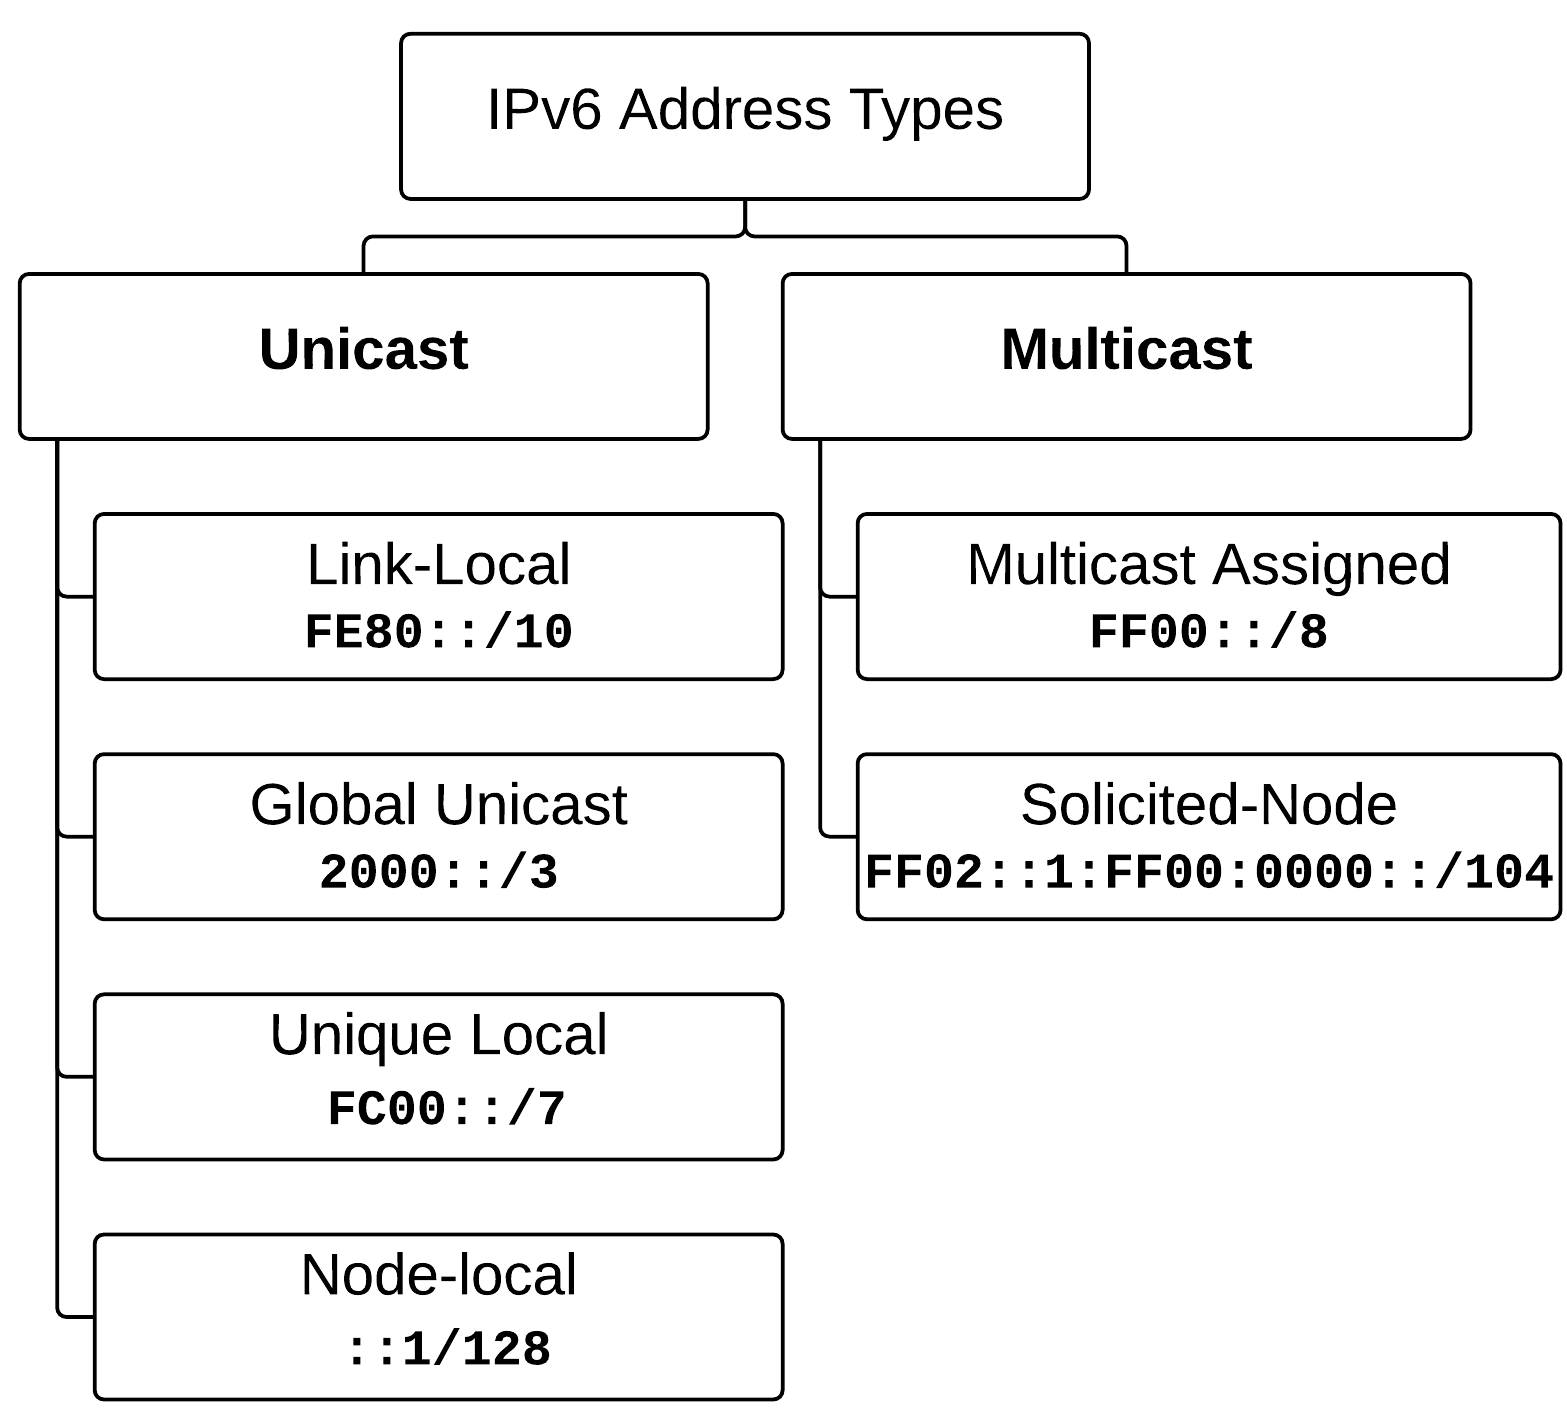 ipv6 memungkinkan adanya multiple address assignment yaitu